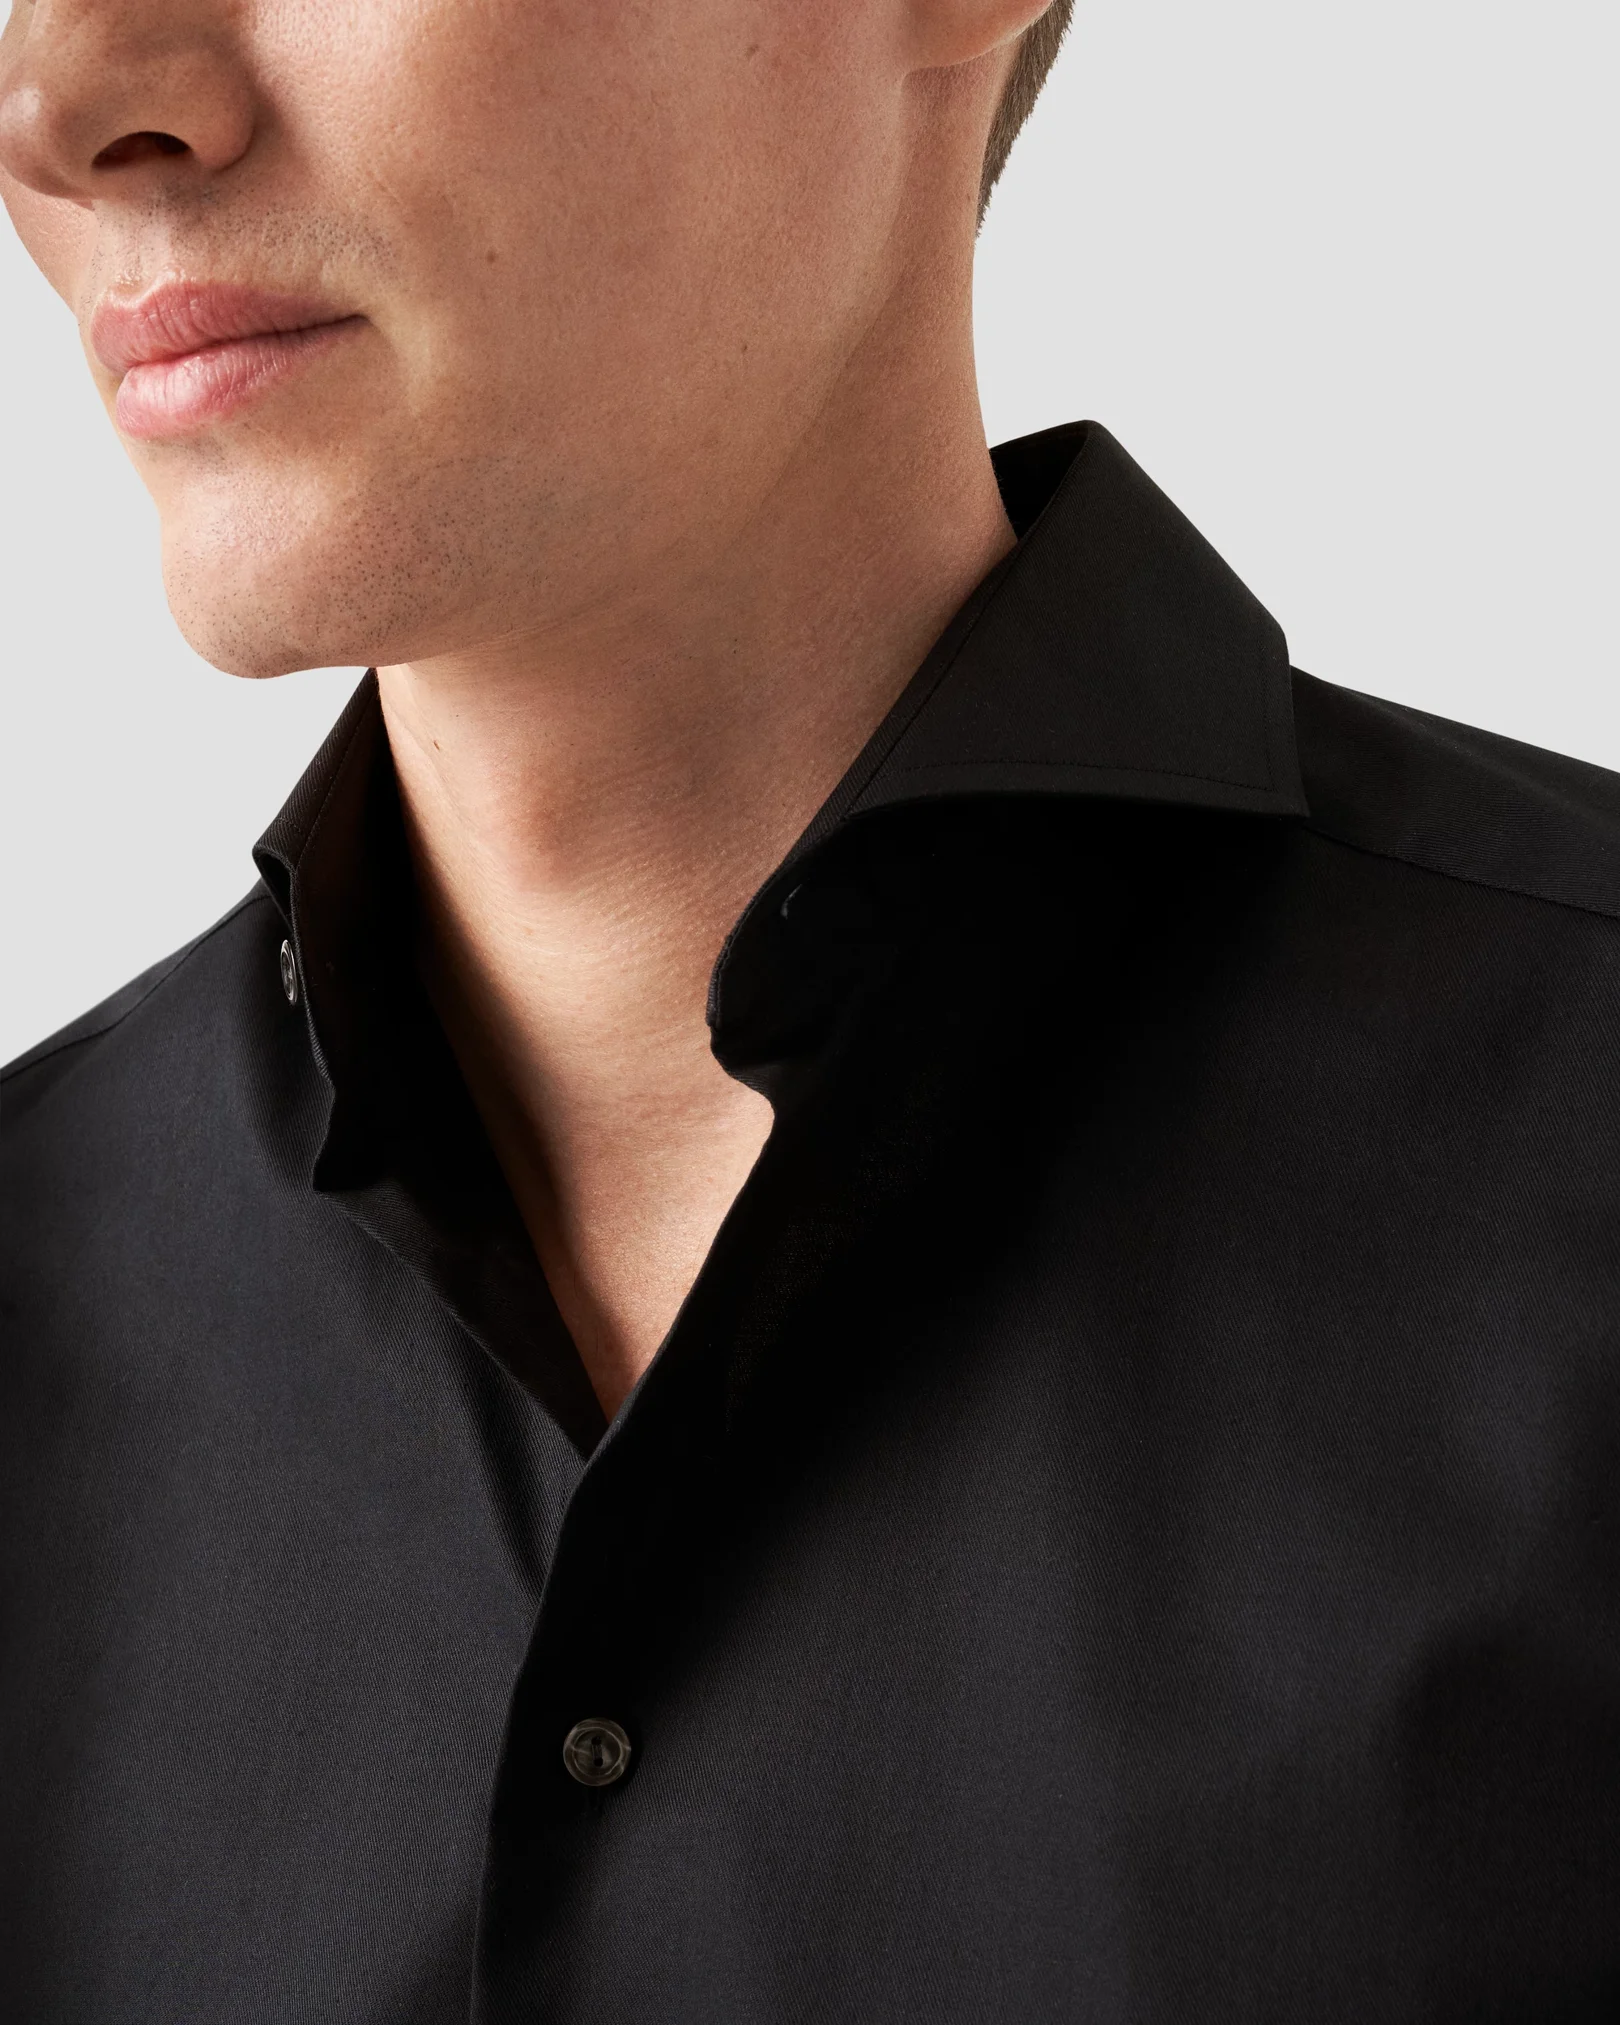 Eton - black twill stretch shirt extreme cut away